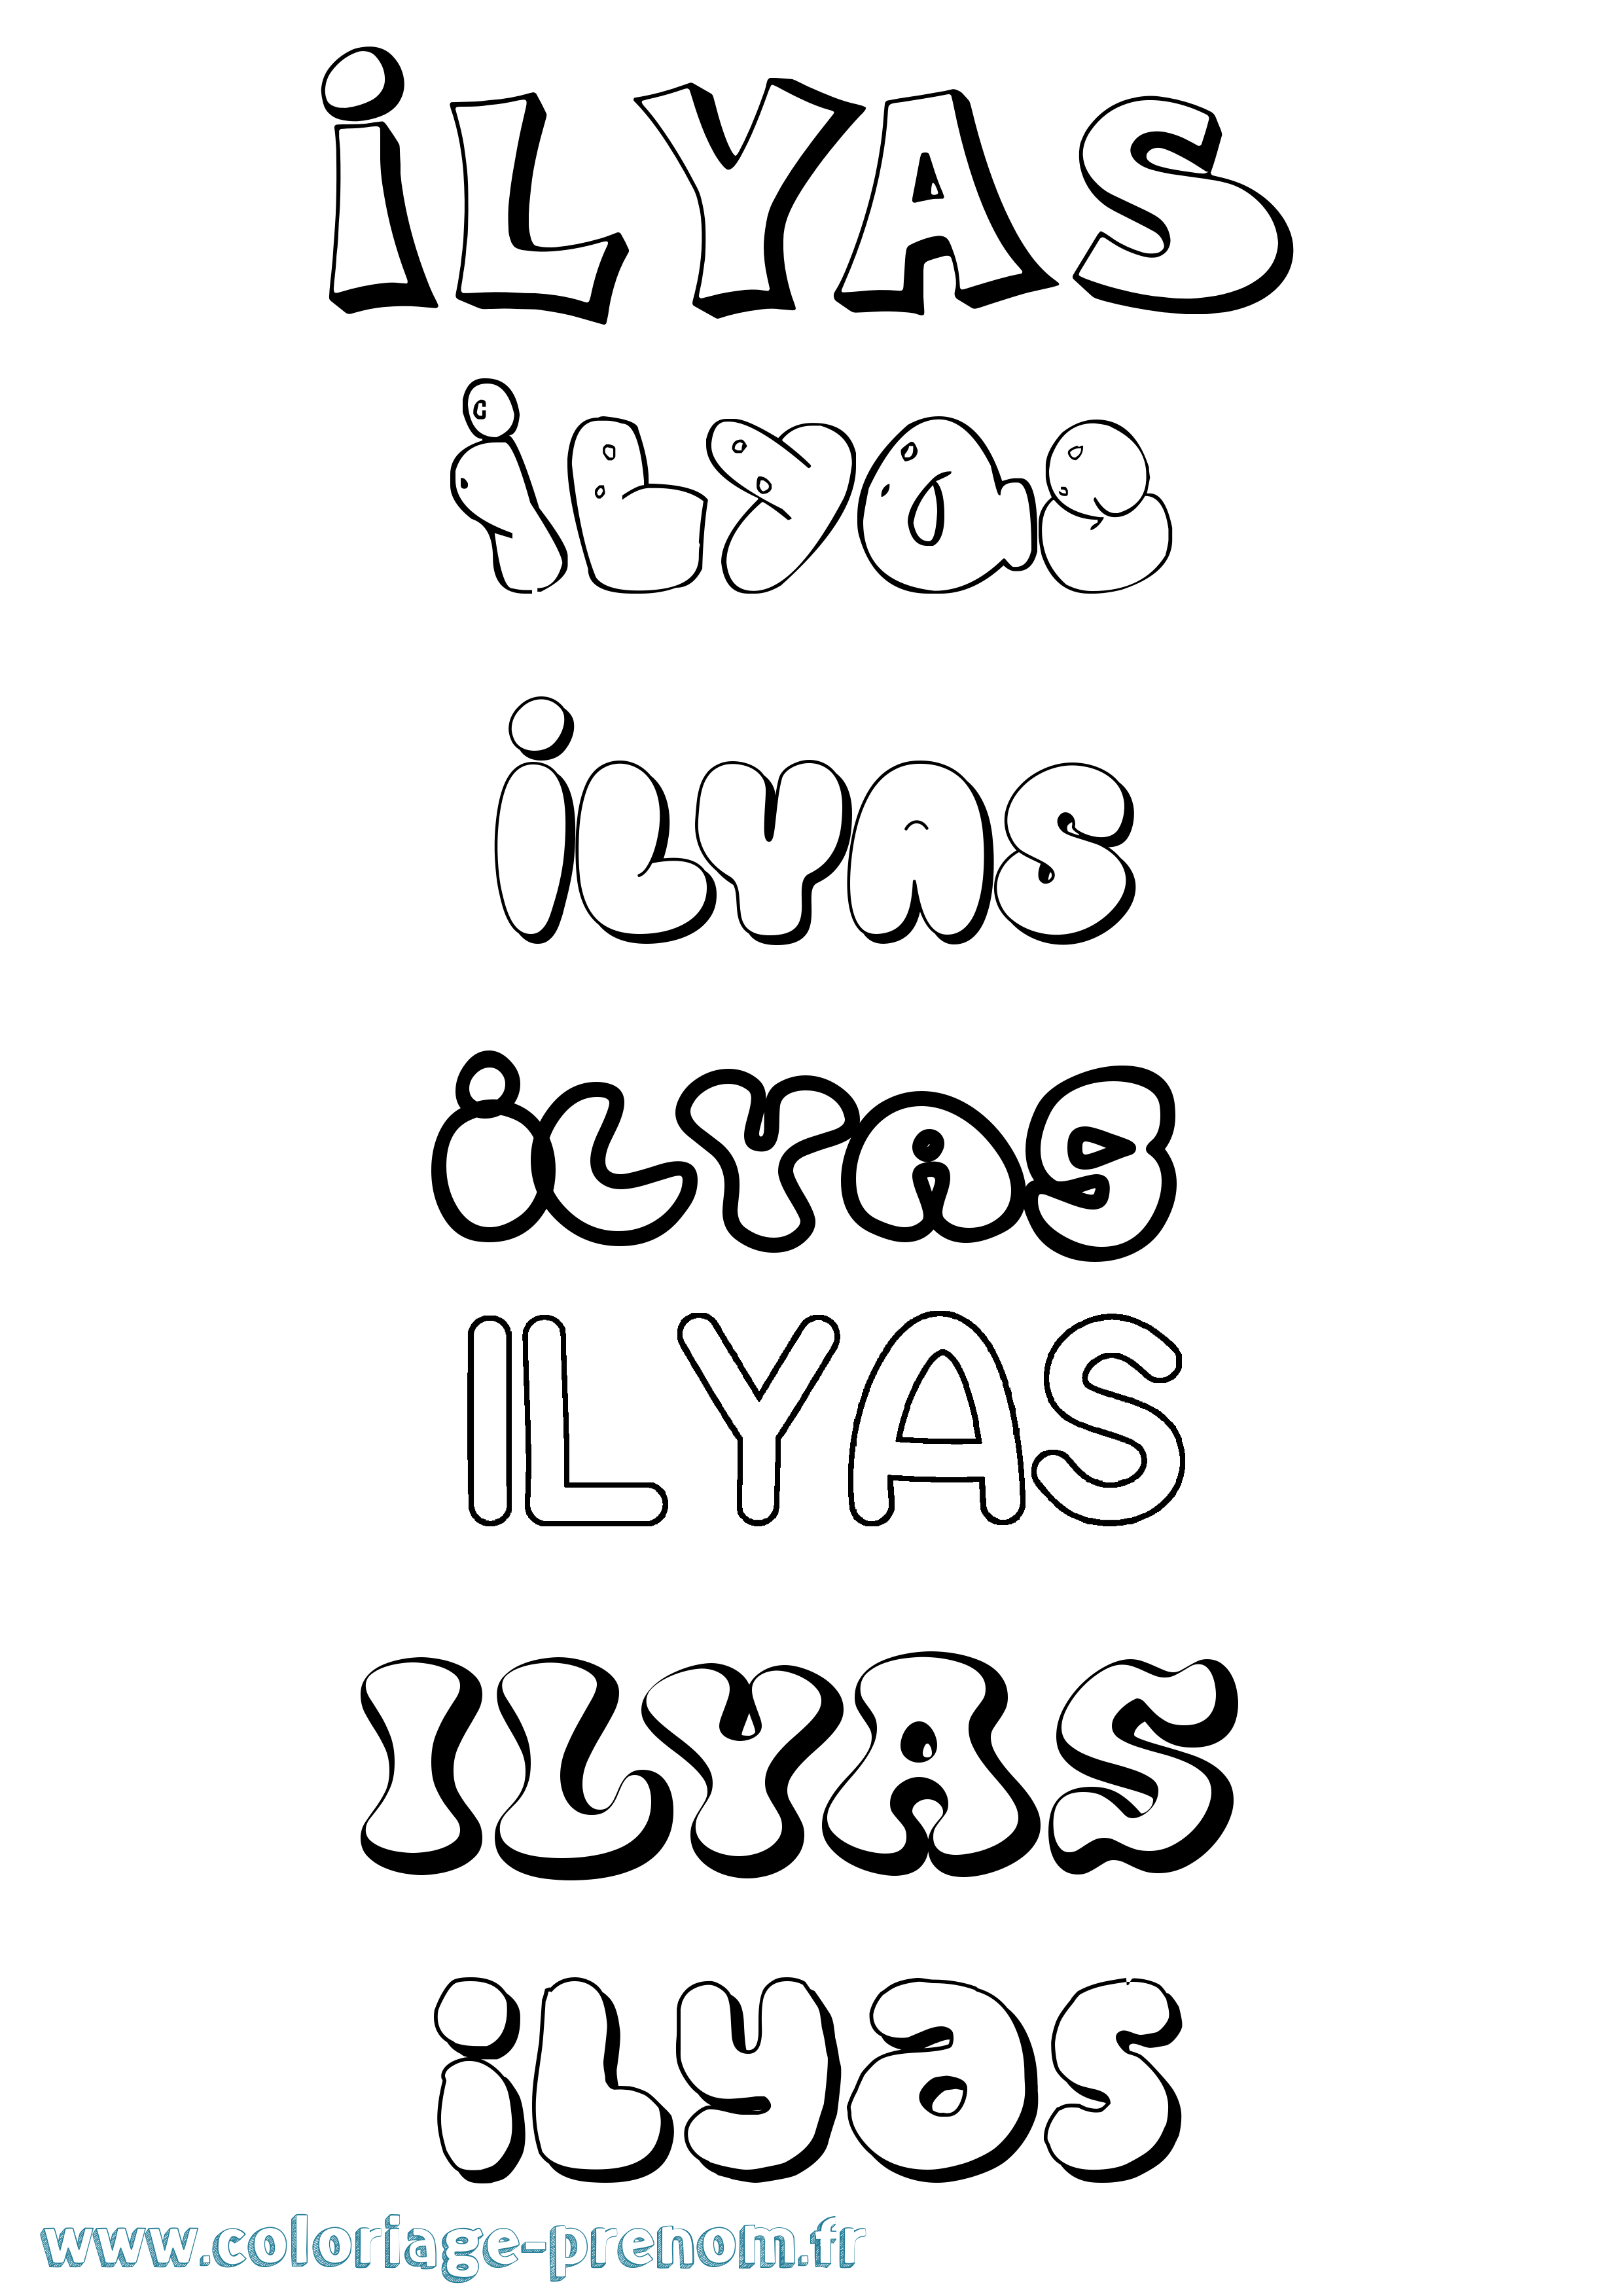 Coloriage prénom Ilyas